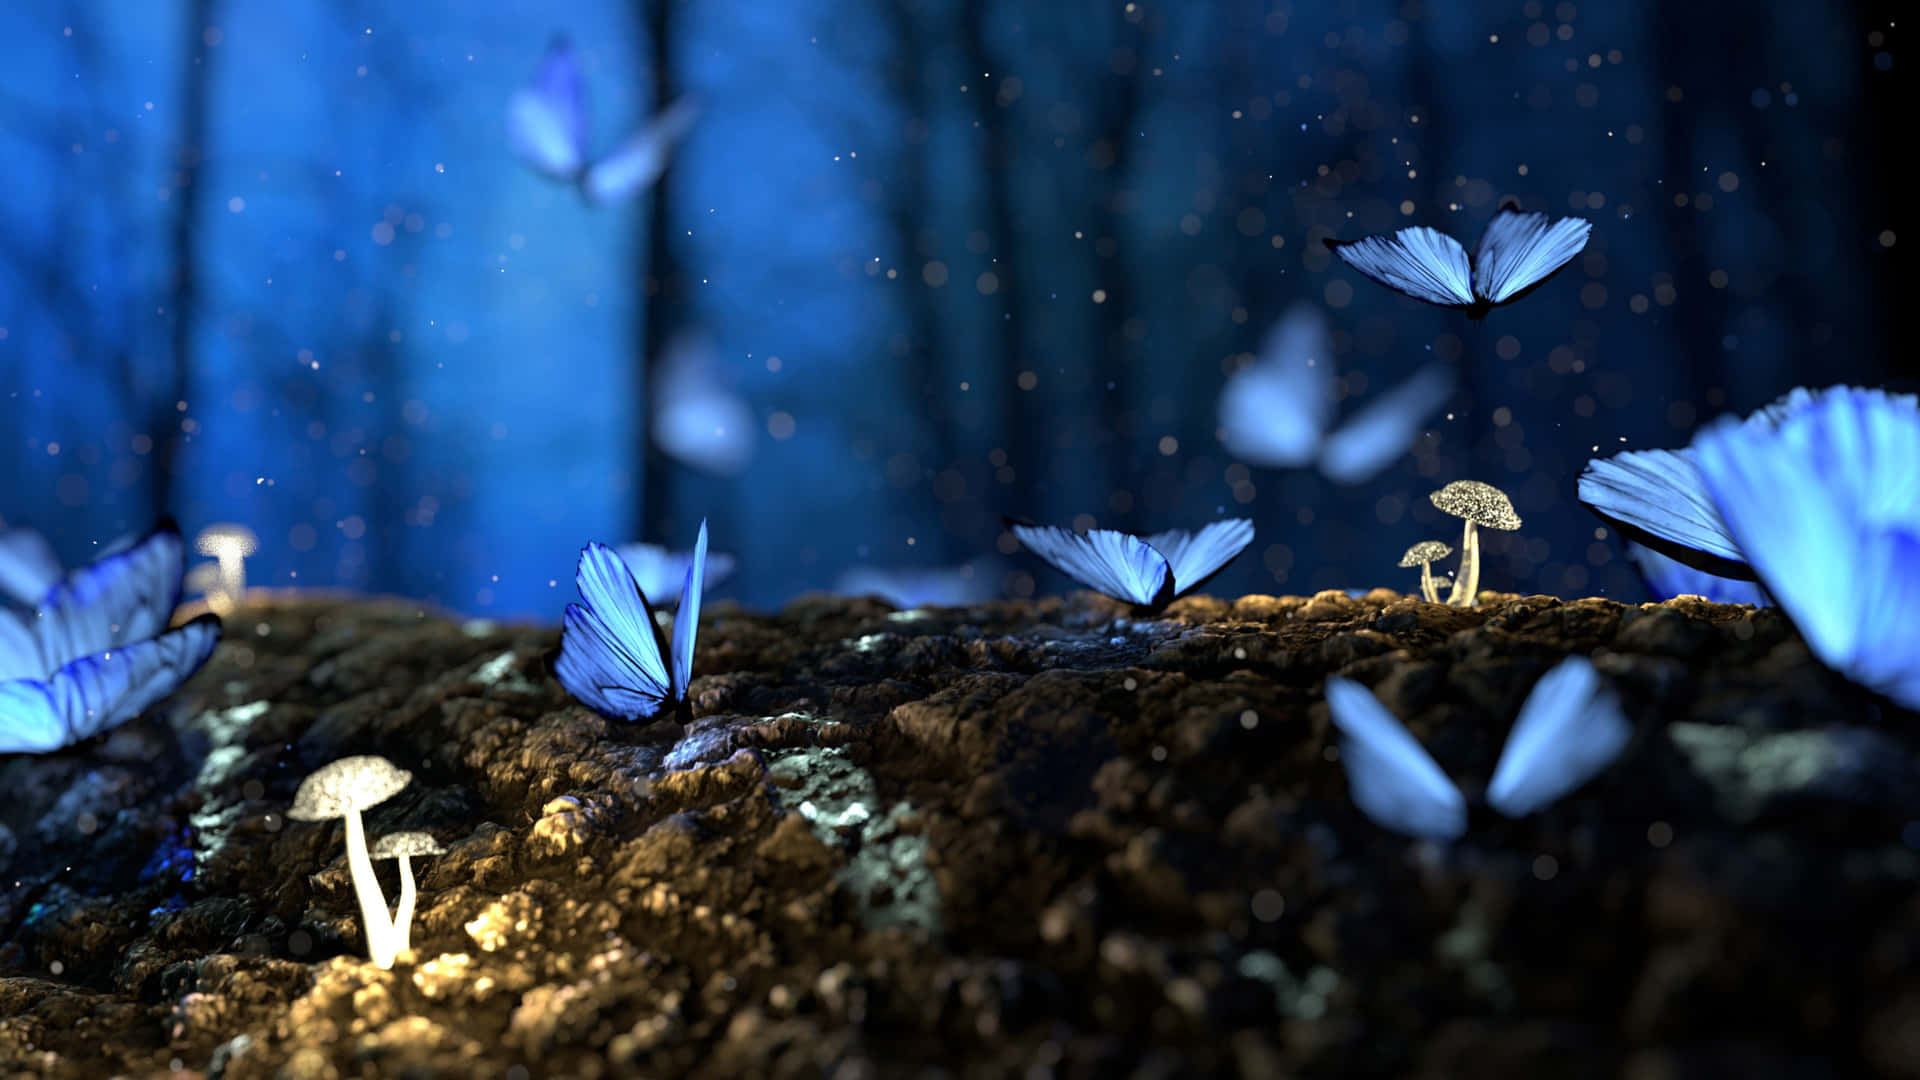 Bellezade La Naturaleza: Una Mariposa Azul